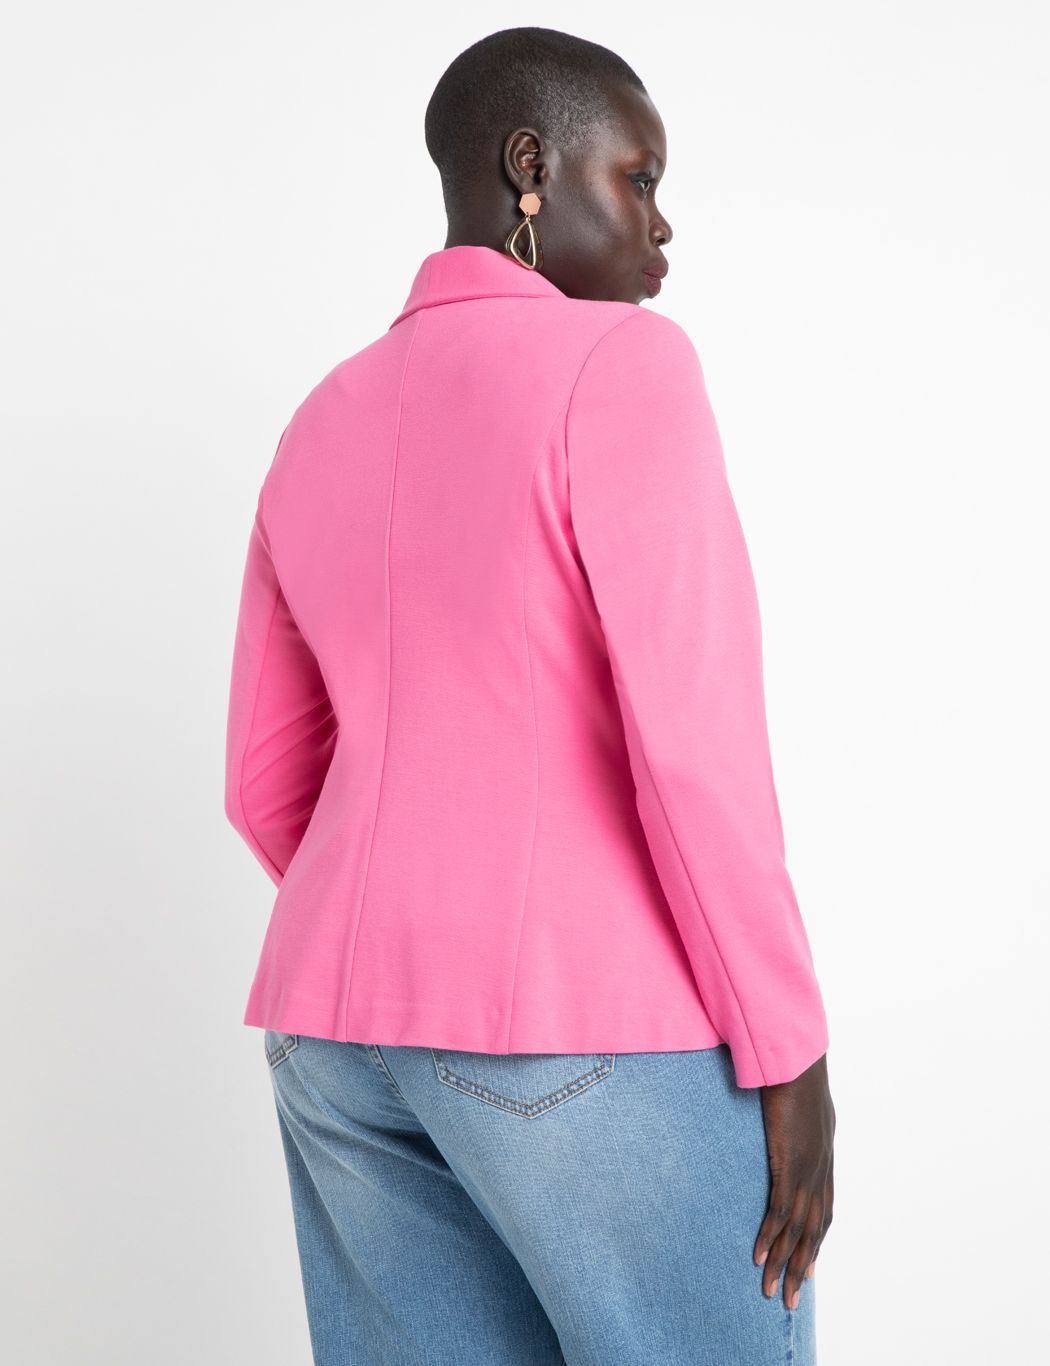 Double Breasted Blazer | Women's Plus Size Coats + Jackets | ELOQUII | Eloquii